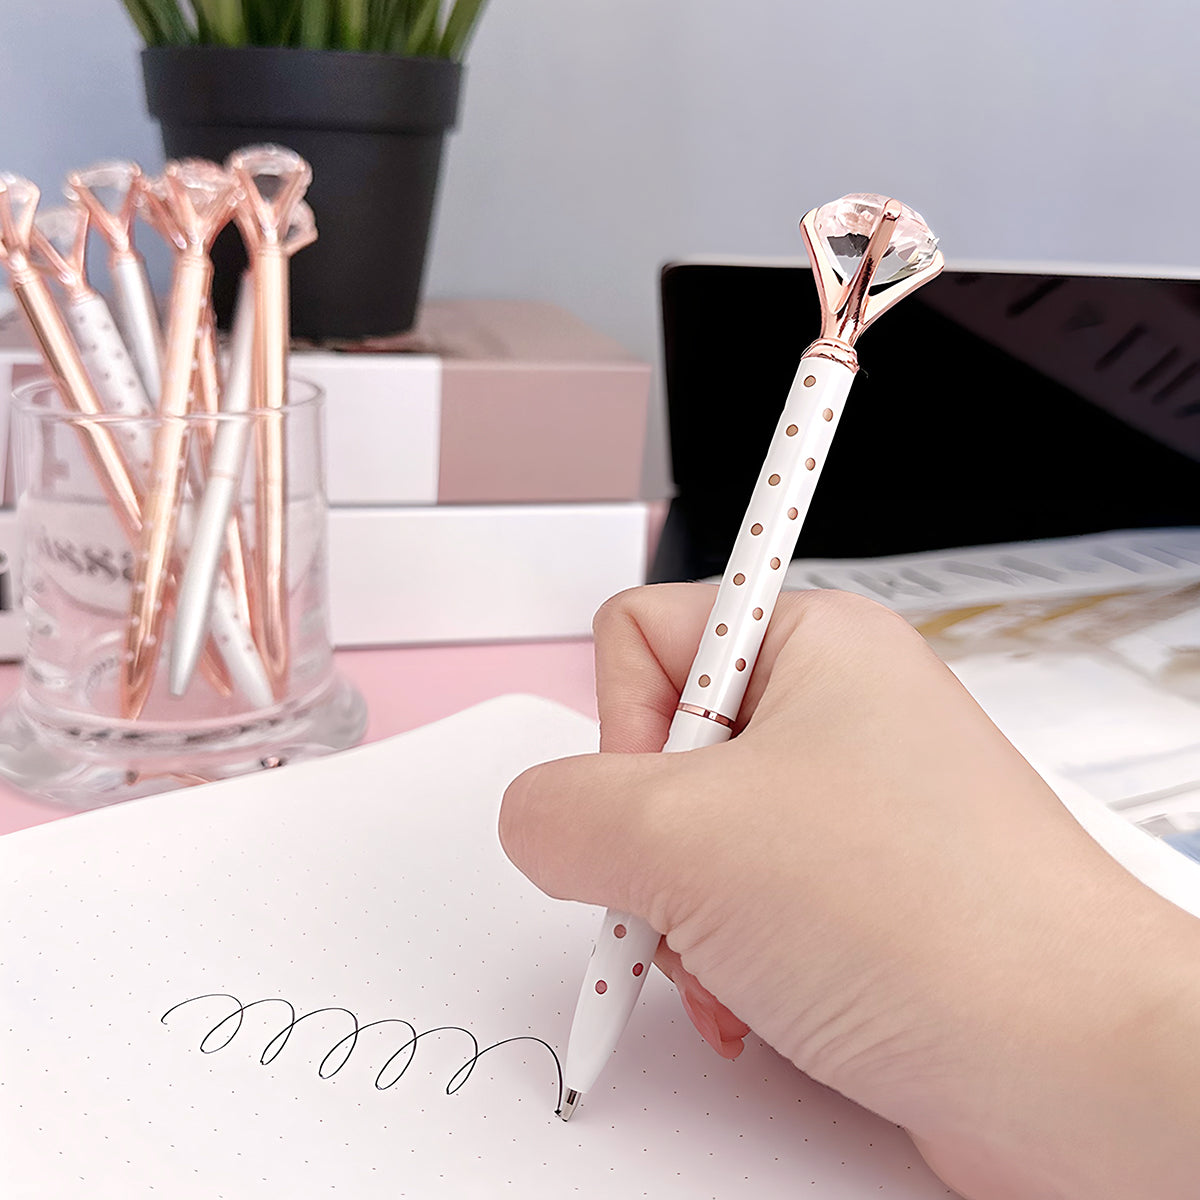 Wrapables Crystal Diamond Ballpoint Pens, 1.0mm Medium Point Wedding Pens with Refills (Set of 8 Pens + 8 Refills) Rose Gold & Silver